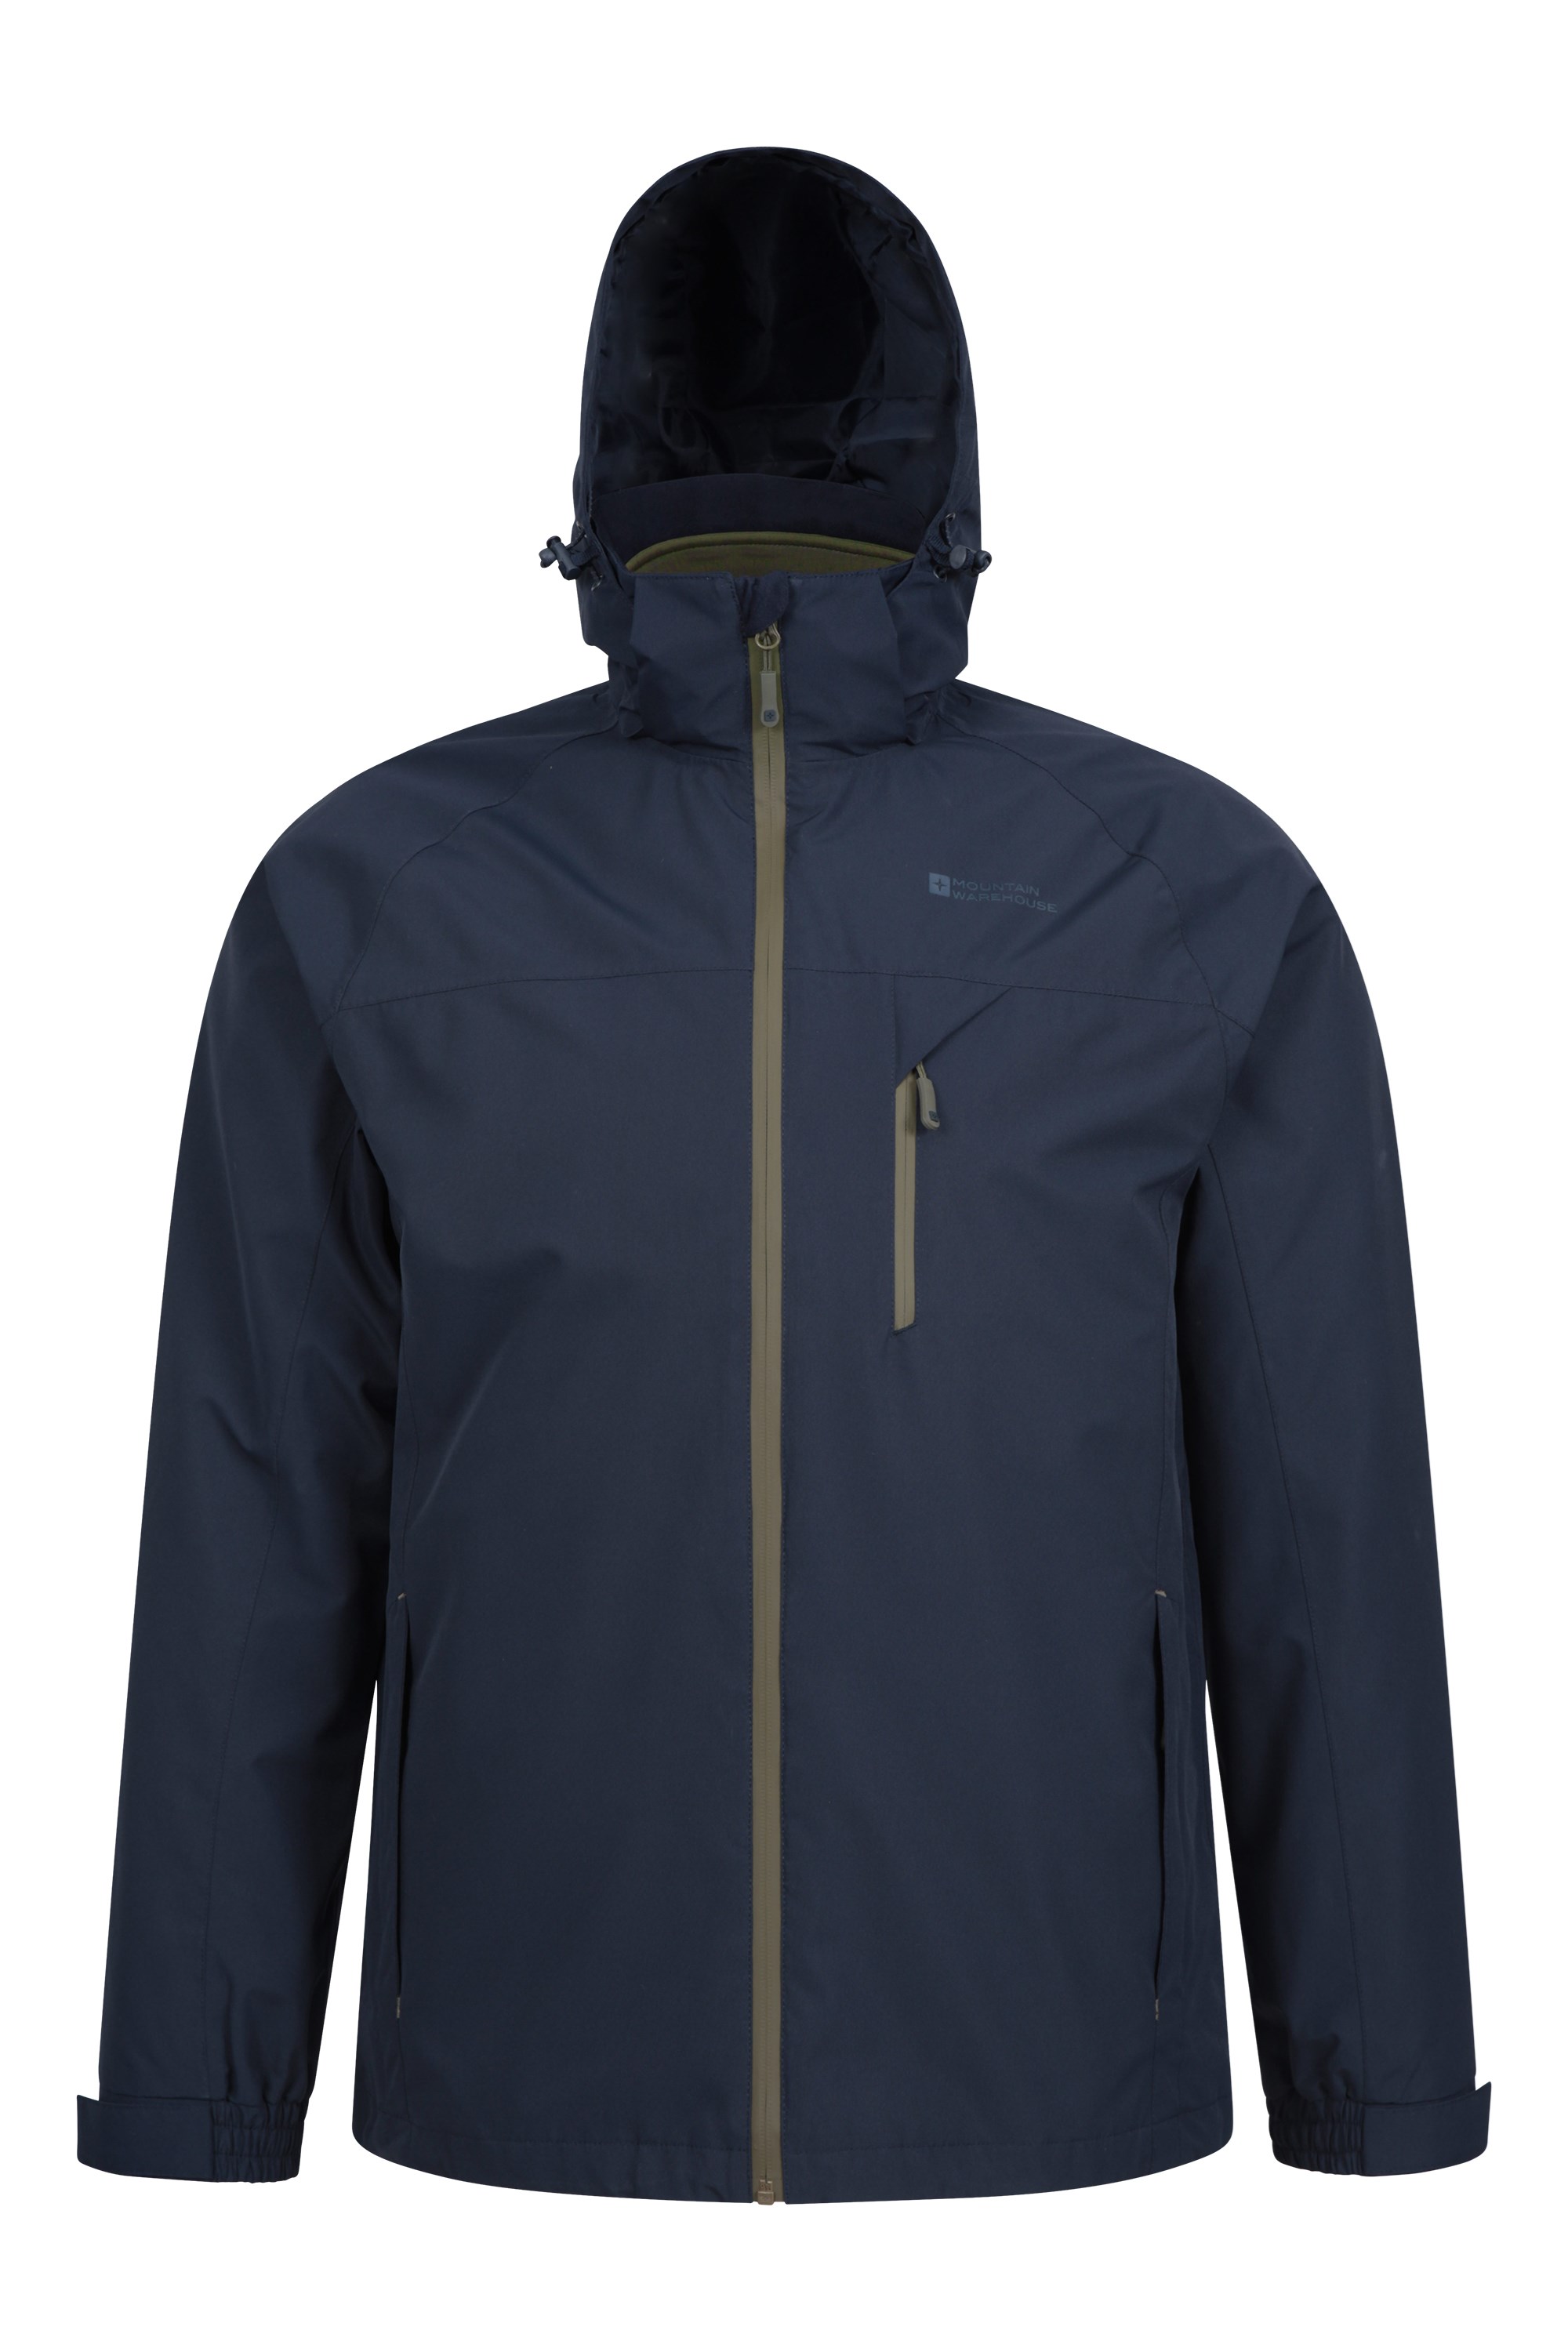 Brisk Extreme Mens 3-in-1 Waterproof Jacket | Mountain Warehouse 